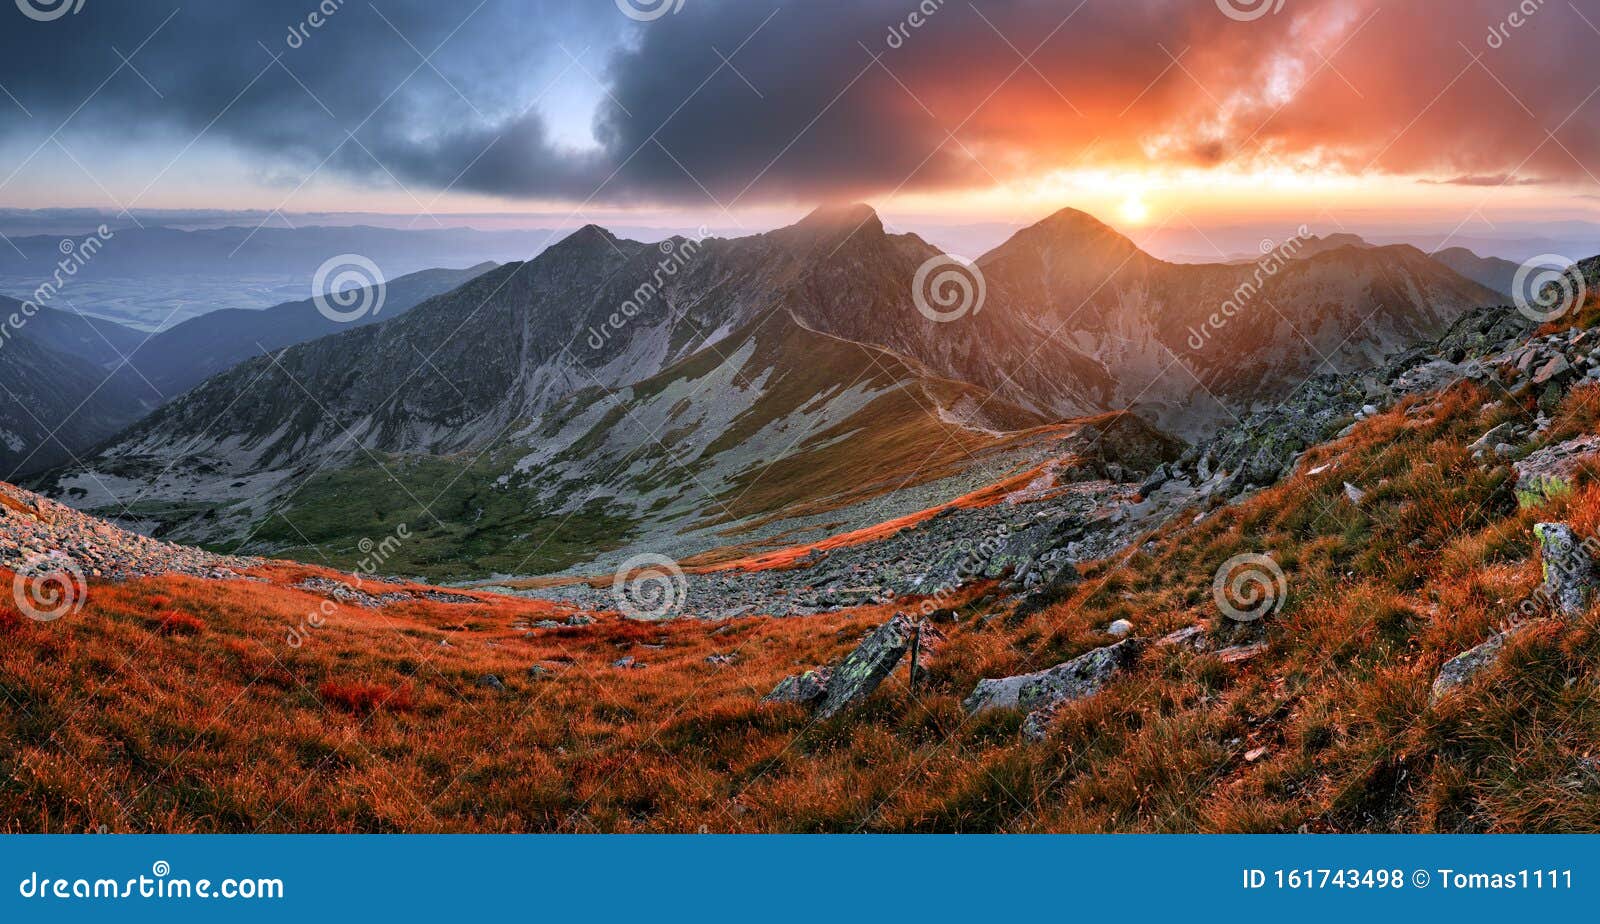 autumn montain panorama - west tatras, slovakia